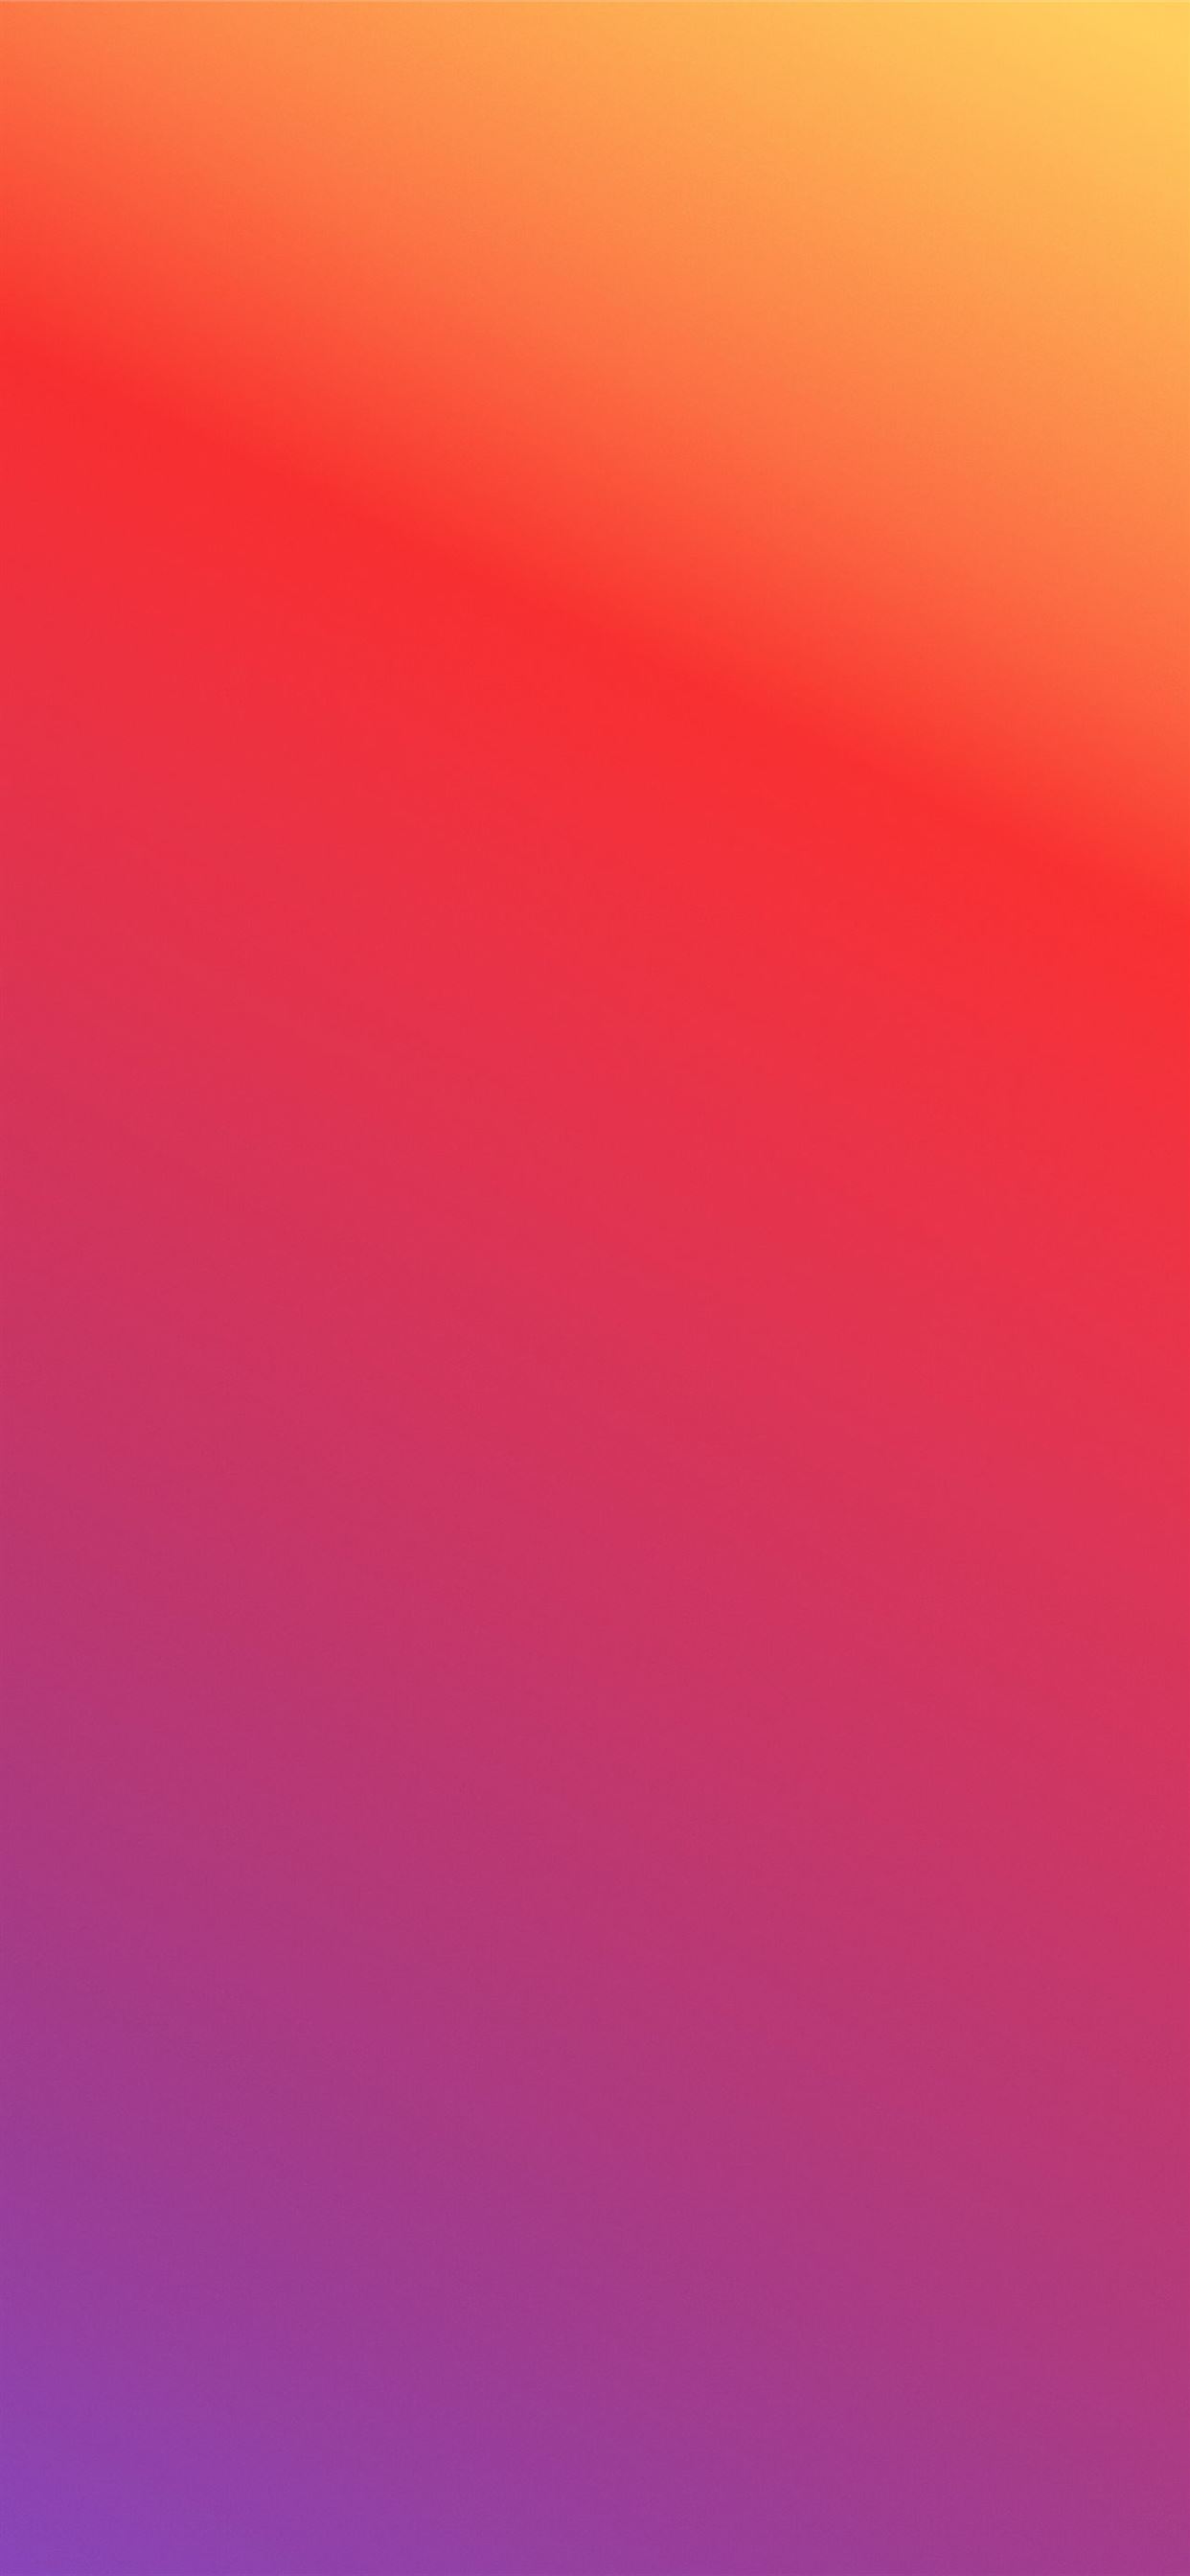 Dark purple to red to orange gradient iPhone X Wallpapers Free Download